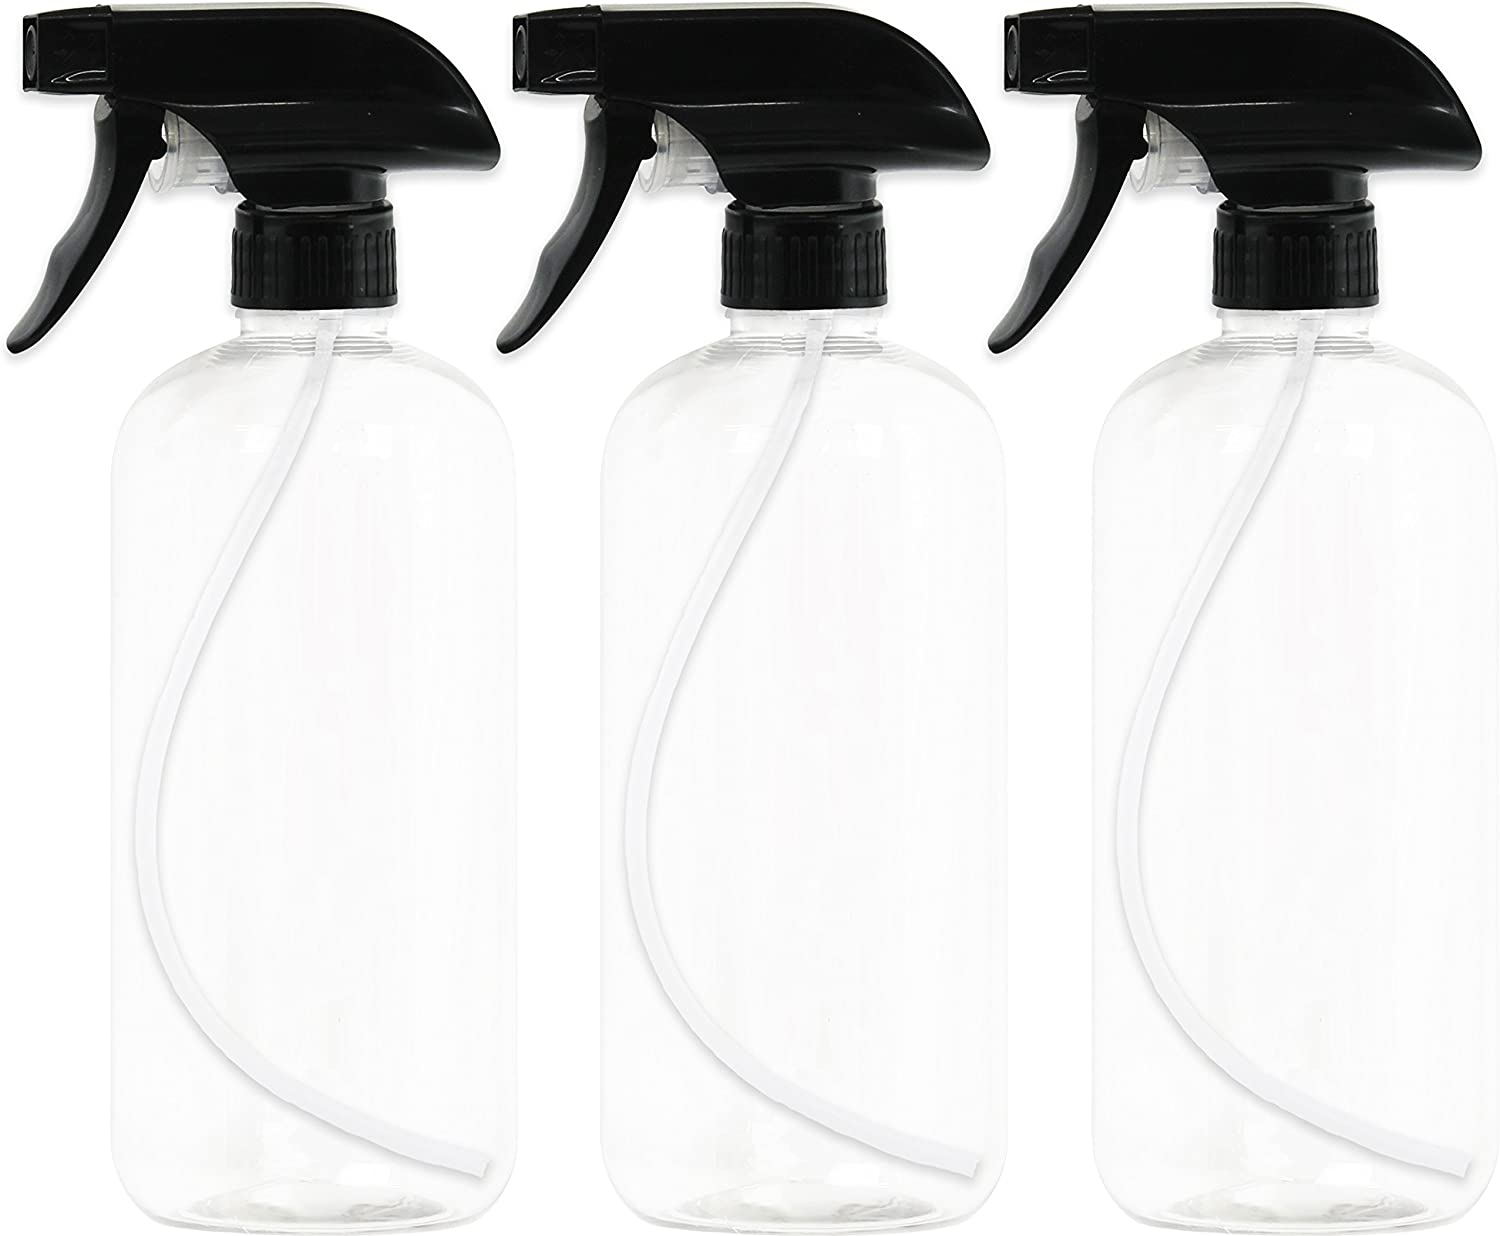 EPAuto Industrial Transparent Spray Bottles, 3-Pack